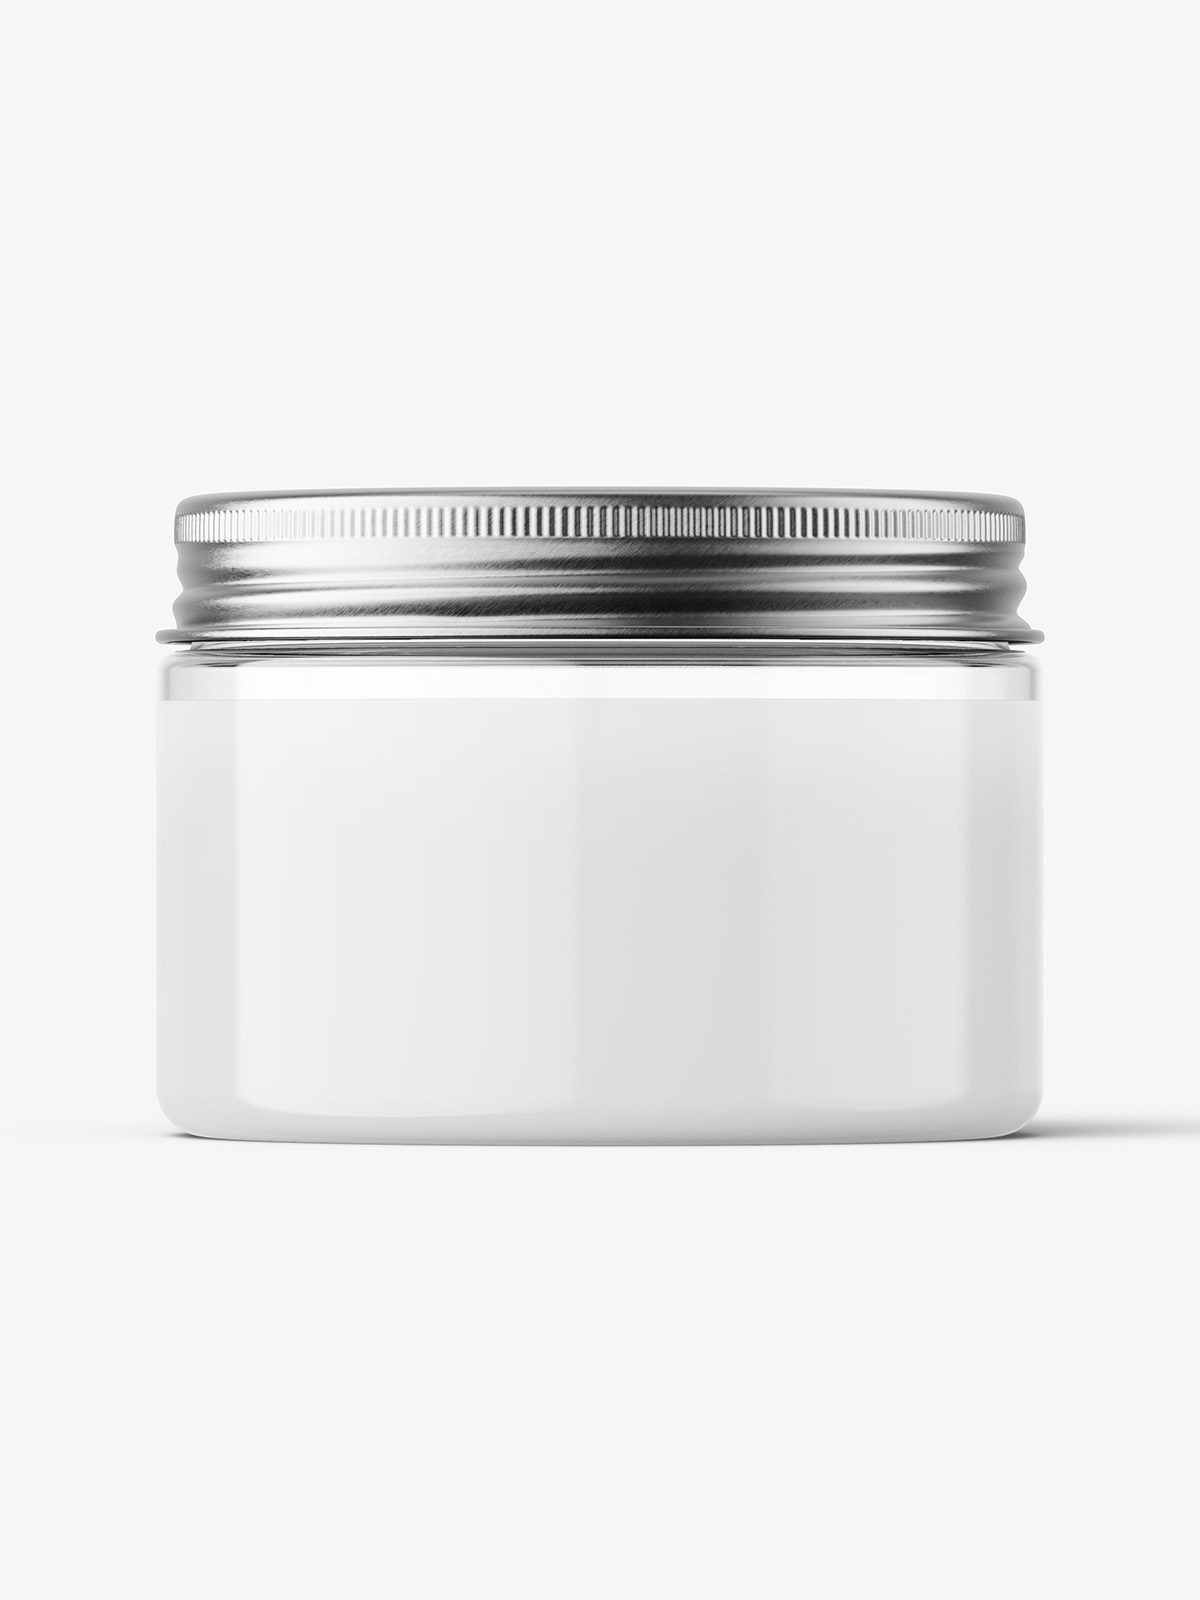 Download Transparent Jar With Metallic Cap Mockup 150ml Smarty Mockups